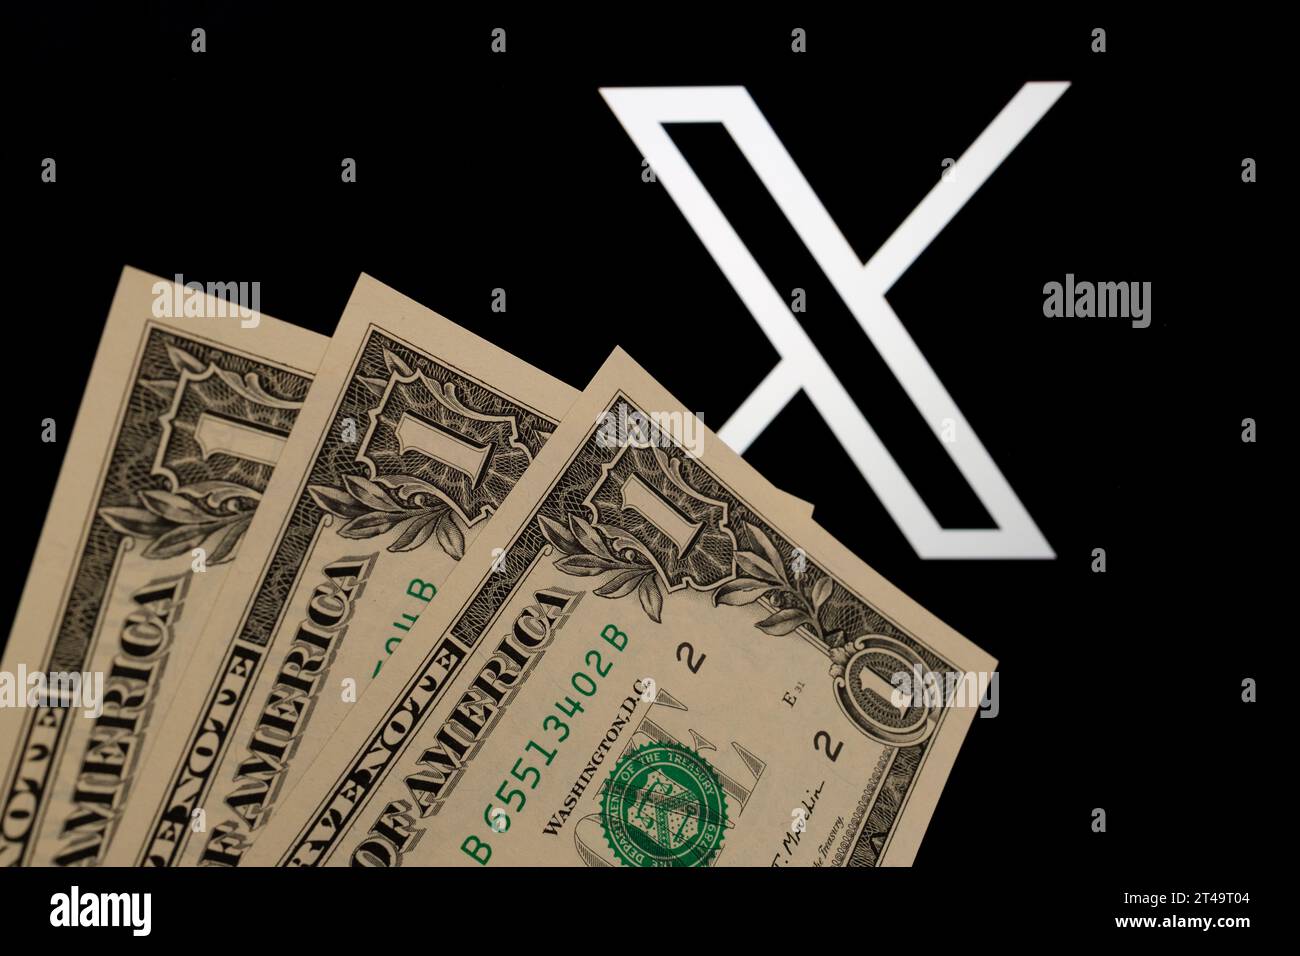 3 US Dollars in front of blurred X social media platform logo (ex Twitter). Concept for new three dollar subscription plan. Stafford, United Kingdom, Stock Photo